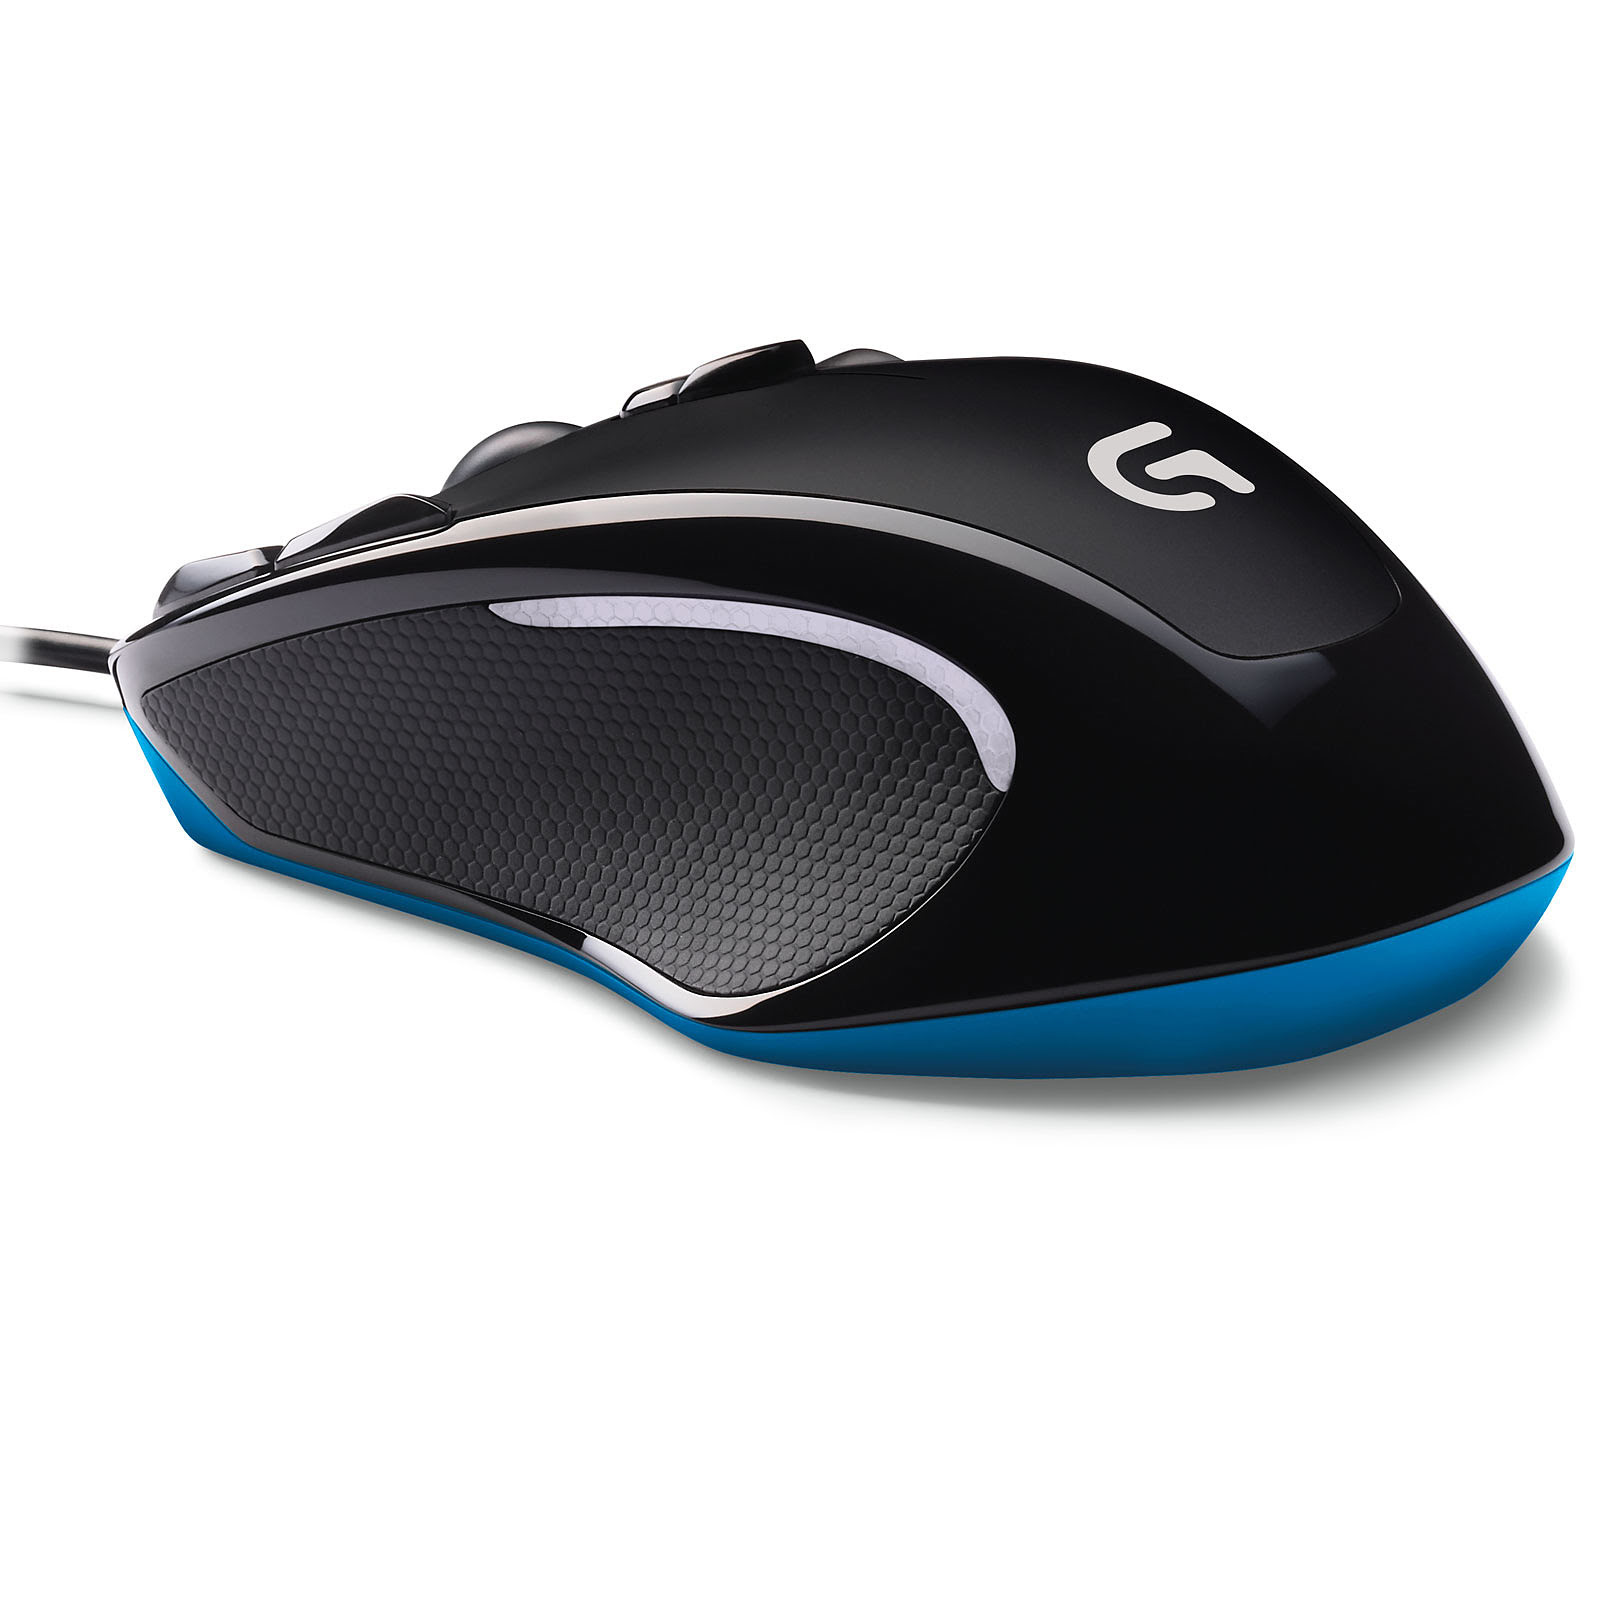 Logitech G300s Gaming Mouse - Souris PC Logitech - Cybertek.fr - 2